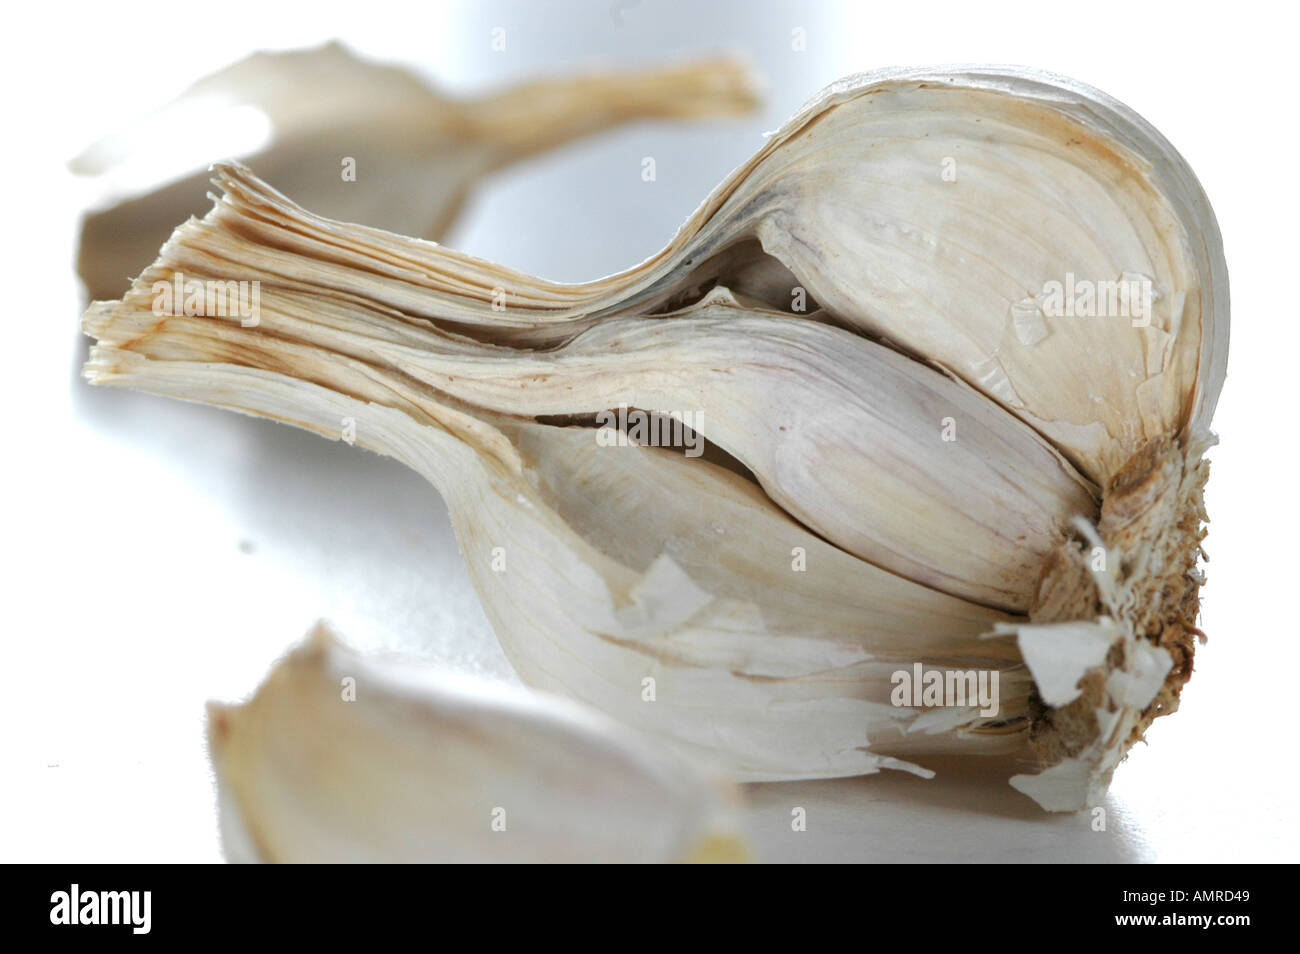 Clove of garlic Stock Photo